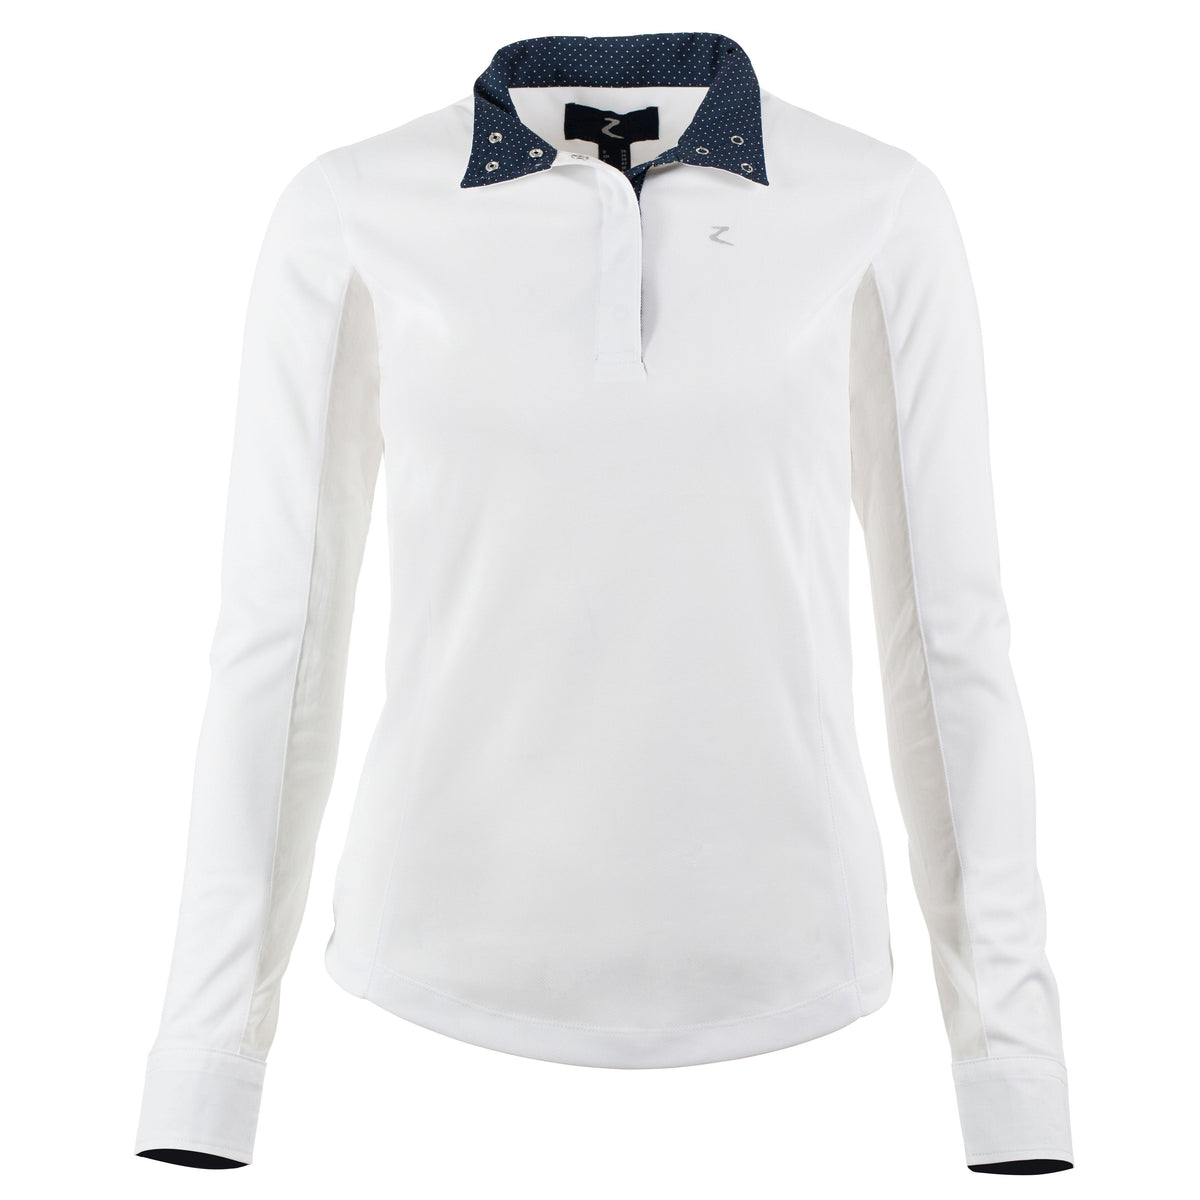 HORZE CLOTHING Horze Blaire Long Sleeve Show Shirt White